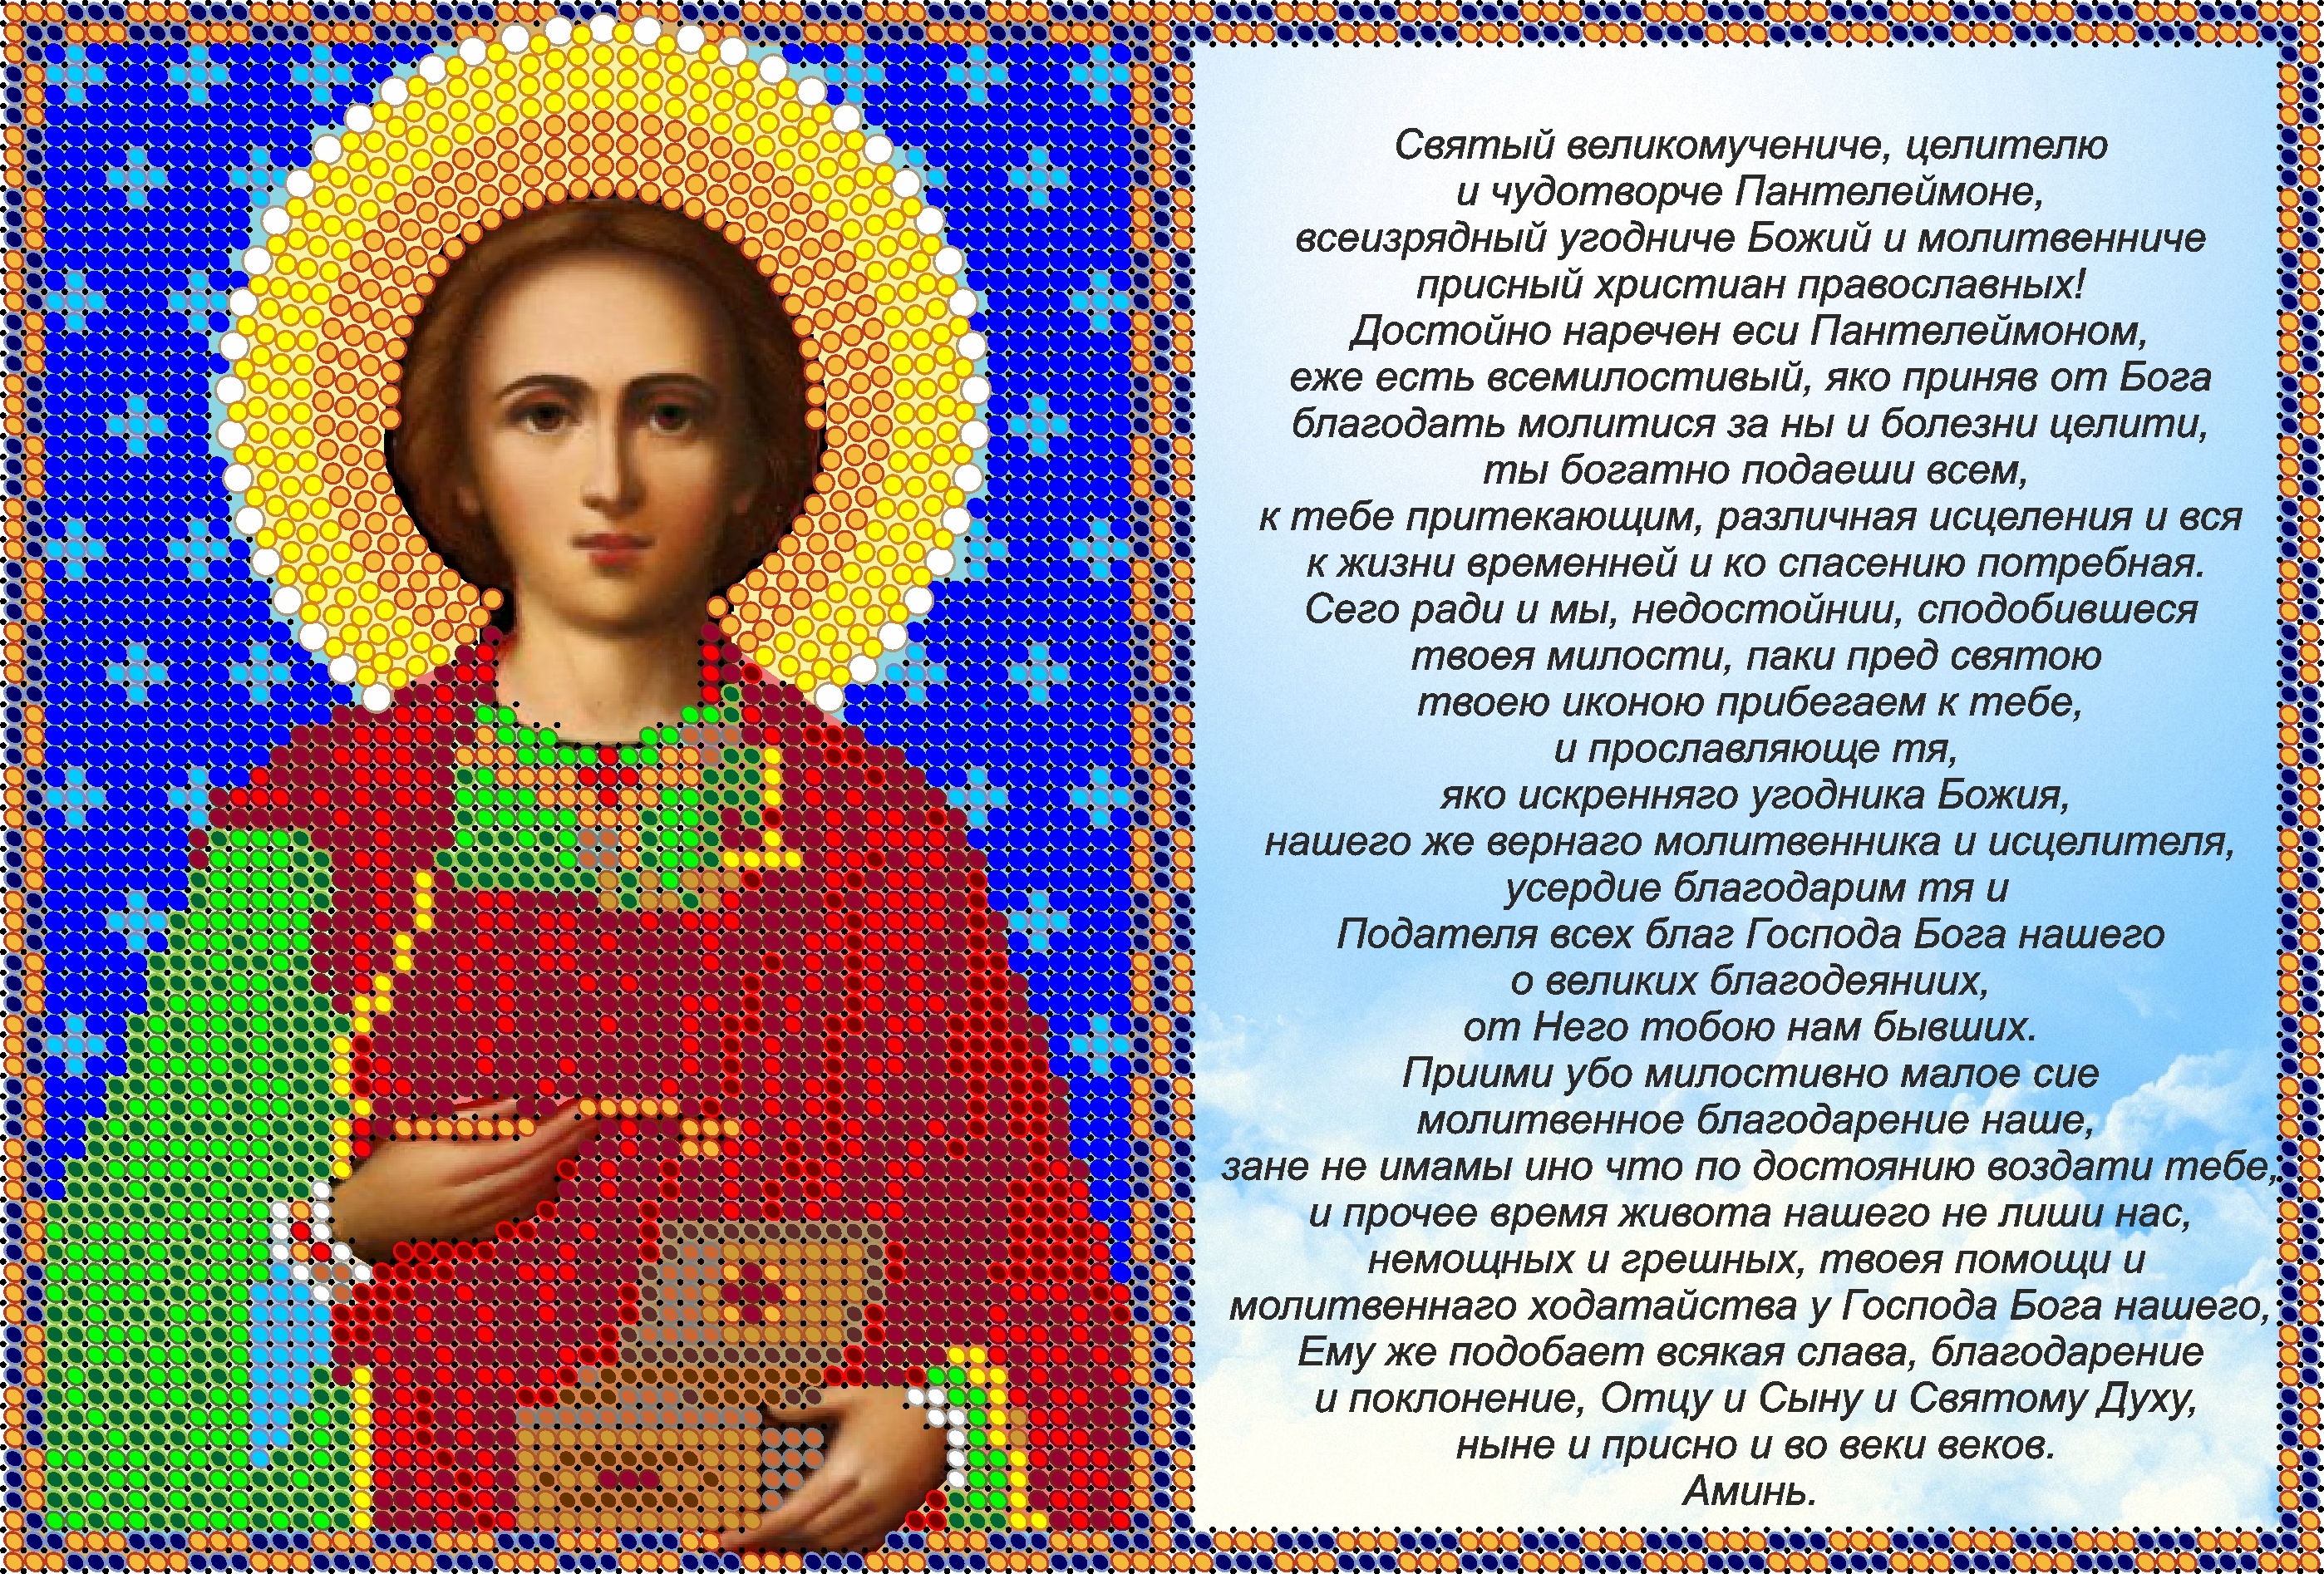 Икона святого пантелеймона целителя фото с молитвой